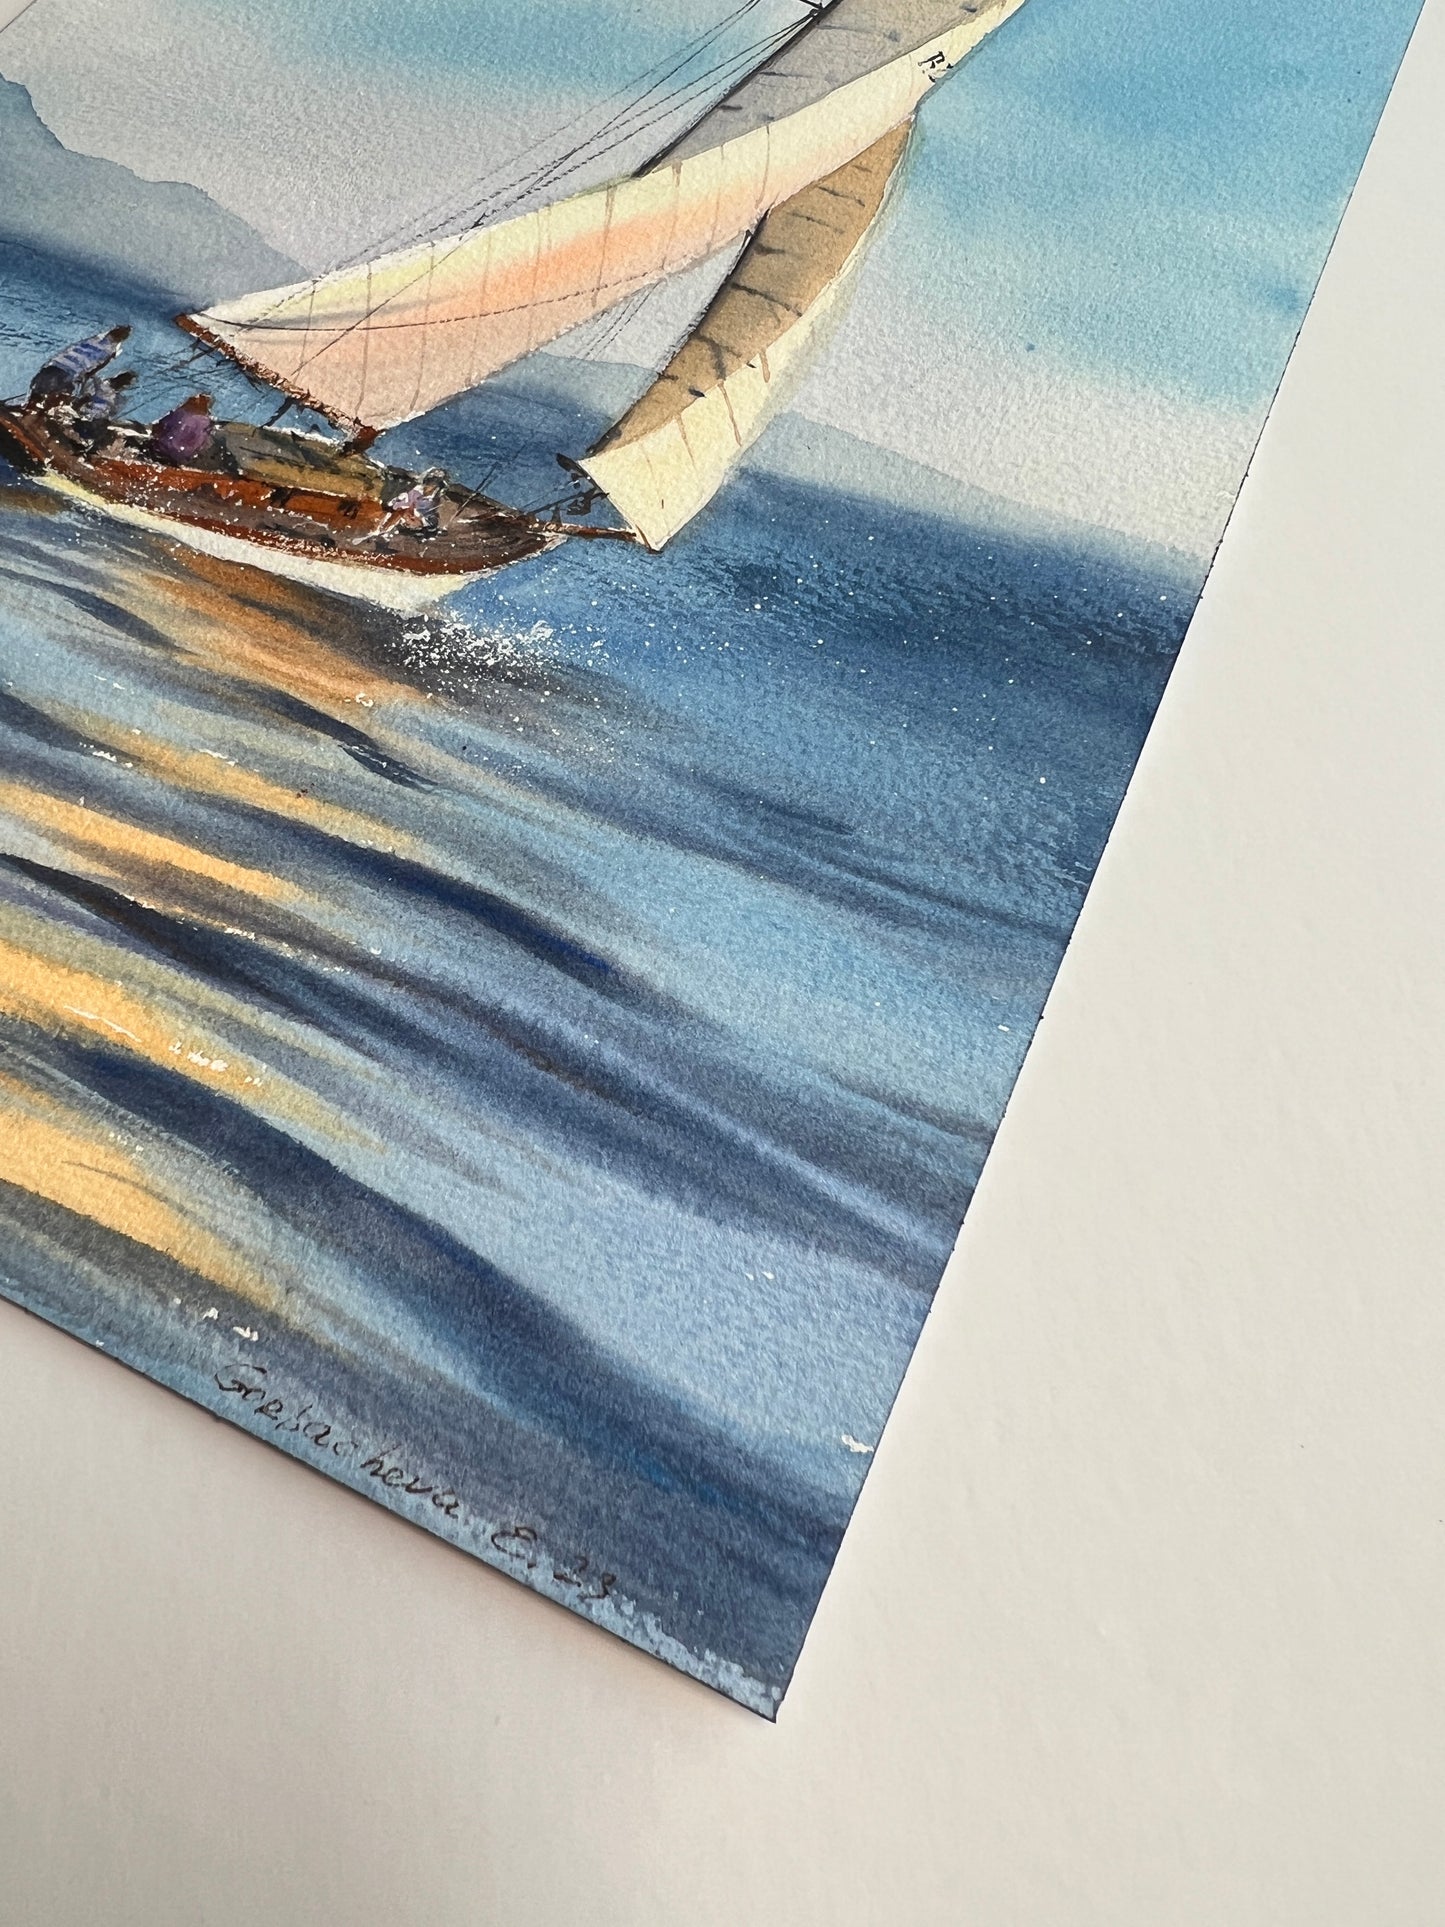 Sailboat Painting Original, Watercolor Lake, Coastal Art Decor, Sailing Hand-painted Artwork by Eugenia Gorbacheva